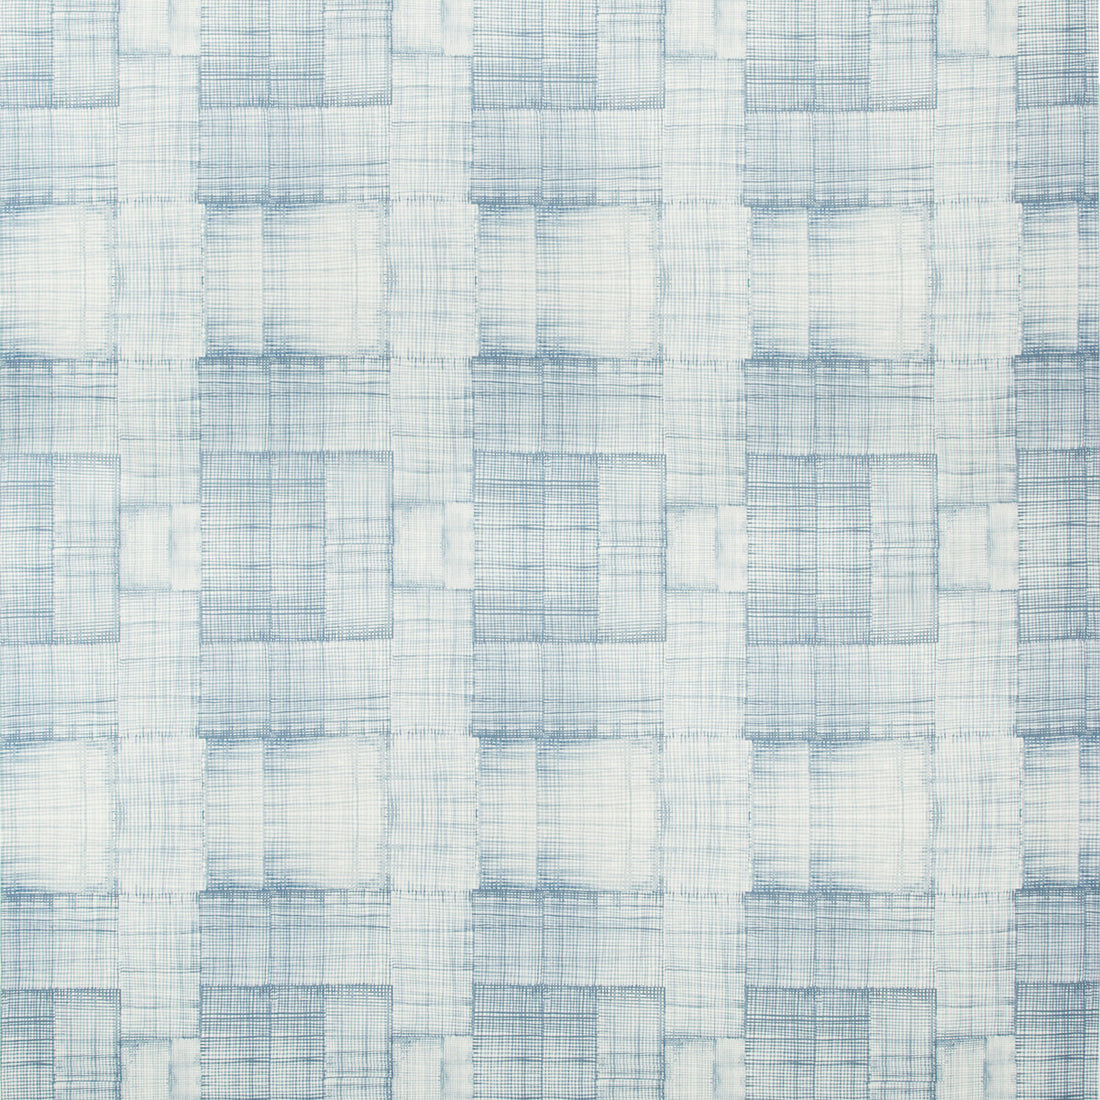 Lj Grw fabric - pattern 2019147.5.0 - by Lee Jofa Modern in the Kw Terra Firma III Indoor Outdoor collection